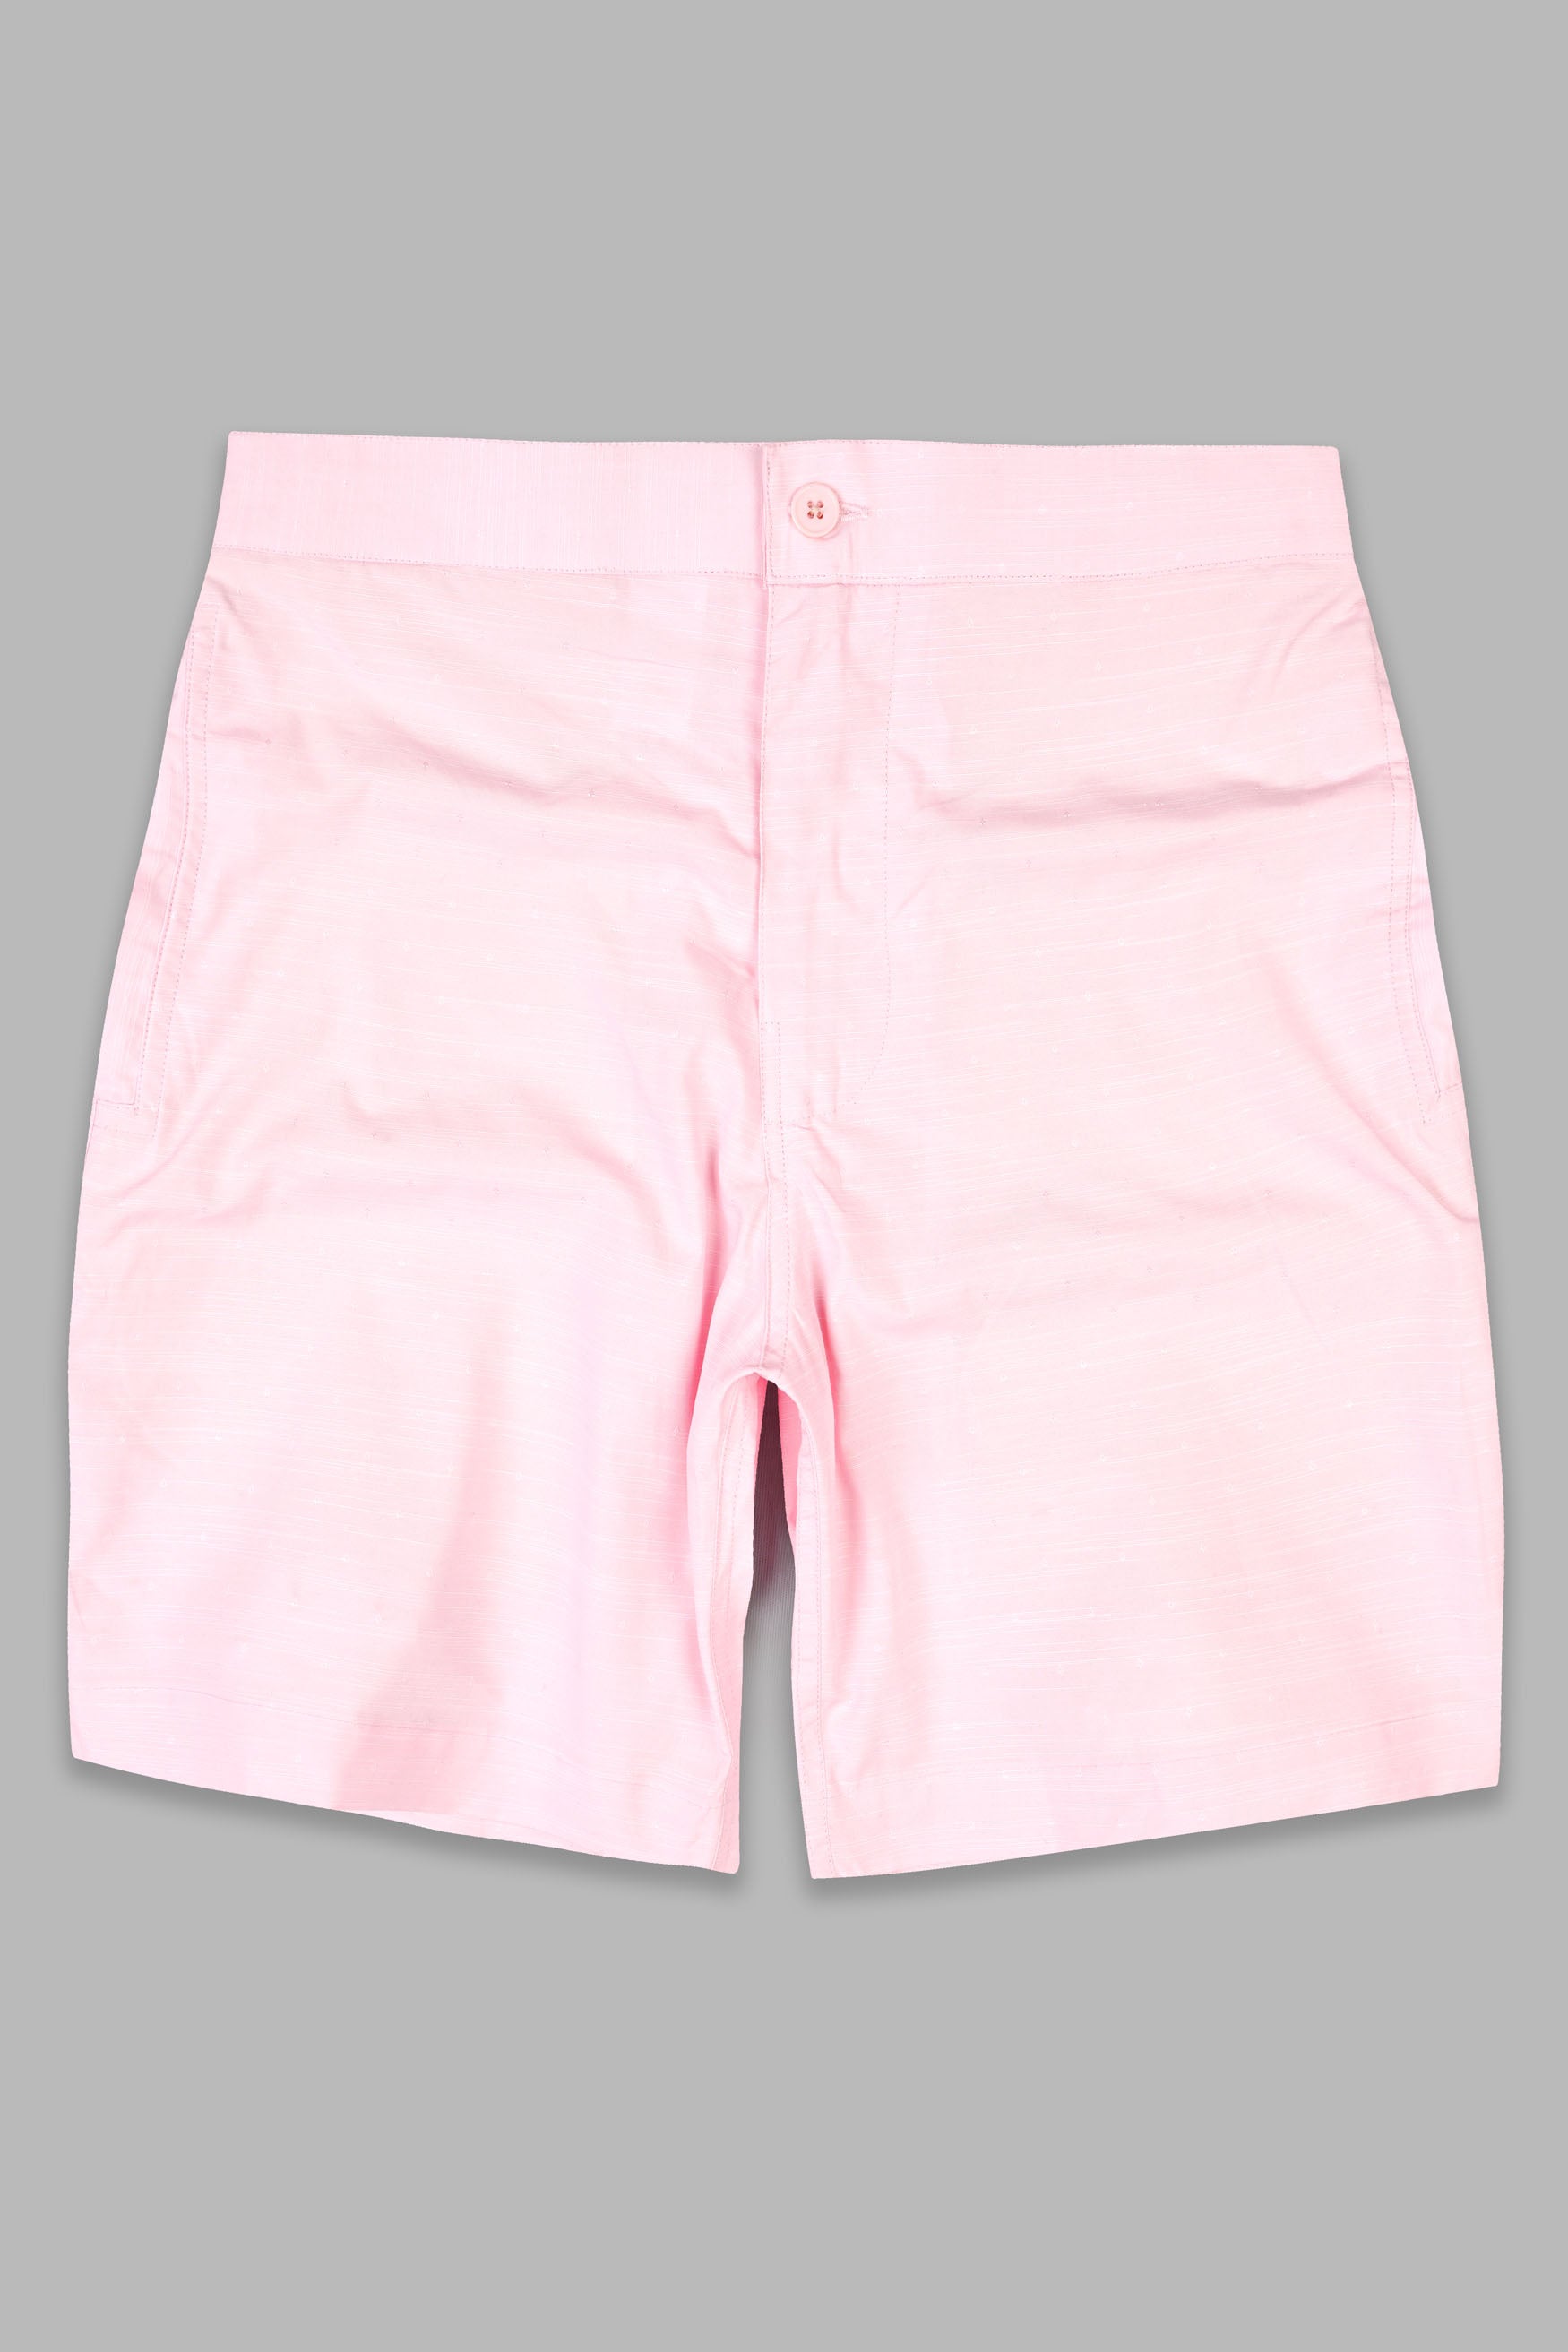 Cosmos Pink Dobby Textured Giza Cotton Shorts SR352-28,  SR352-30,  SR352-32,  SR352-34,  SR352-36,  SR352-38,  SR352-40,  SR352-42,  SR352-44